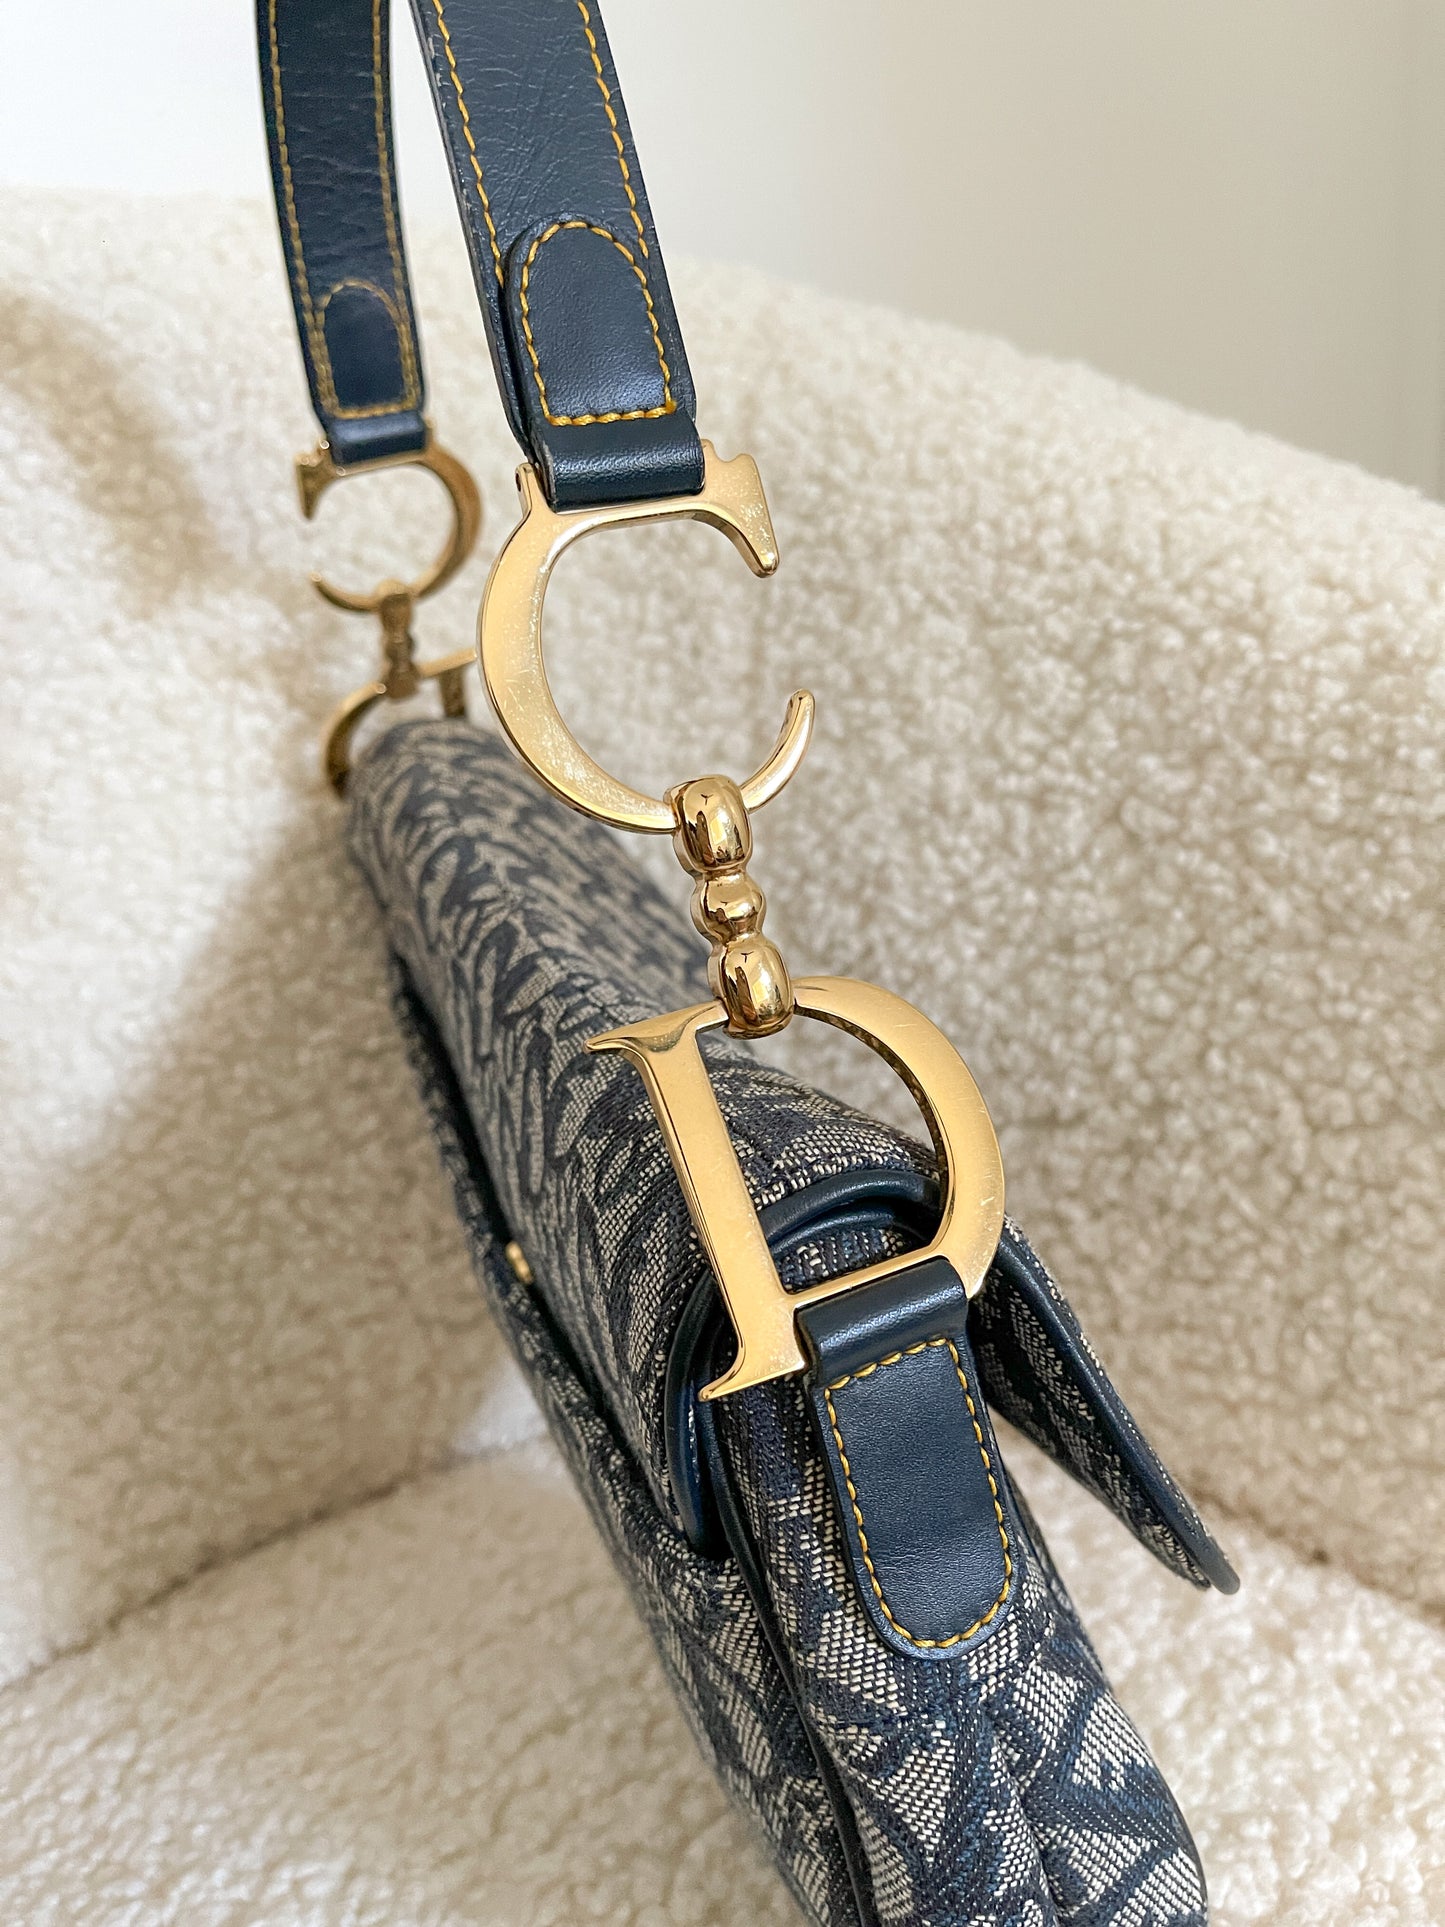 Dior Saddle Bag🐈‍⬛ up online very soon! stay tuned!! #diorvibe  #diorvintage #saddlebag